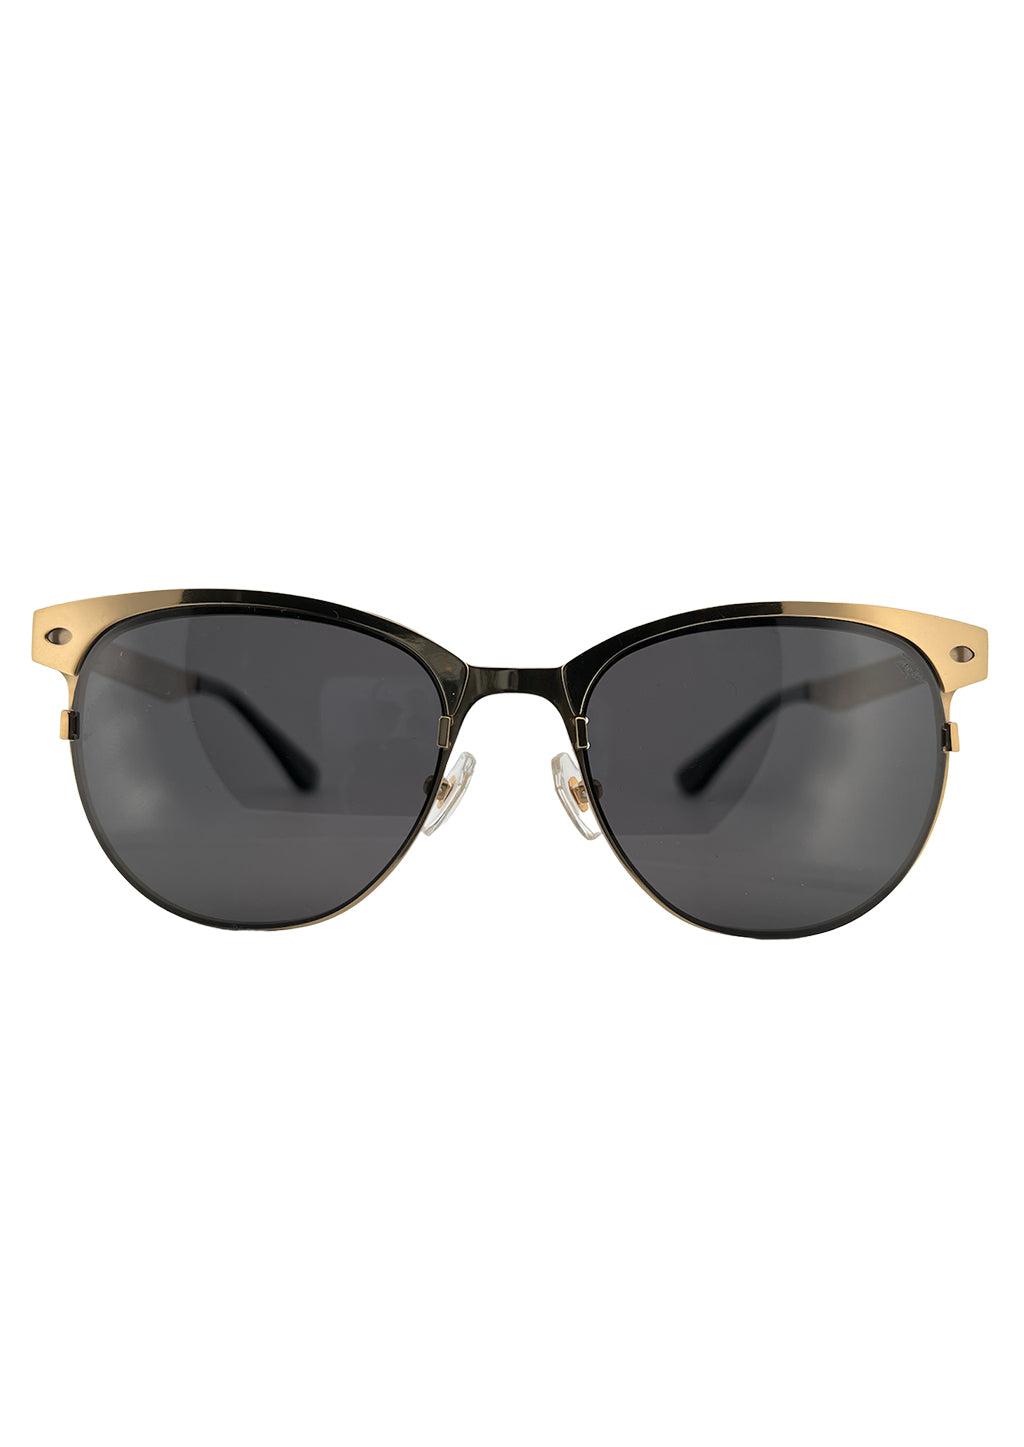 Titanium Clubmasters Sunglasses - V2 - 24K GOLD Plated-1